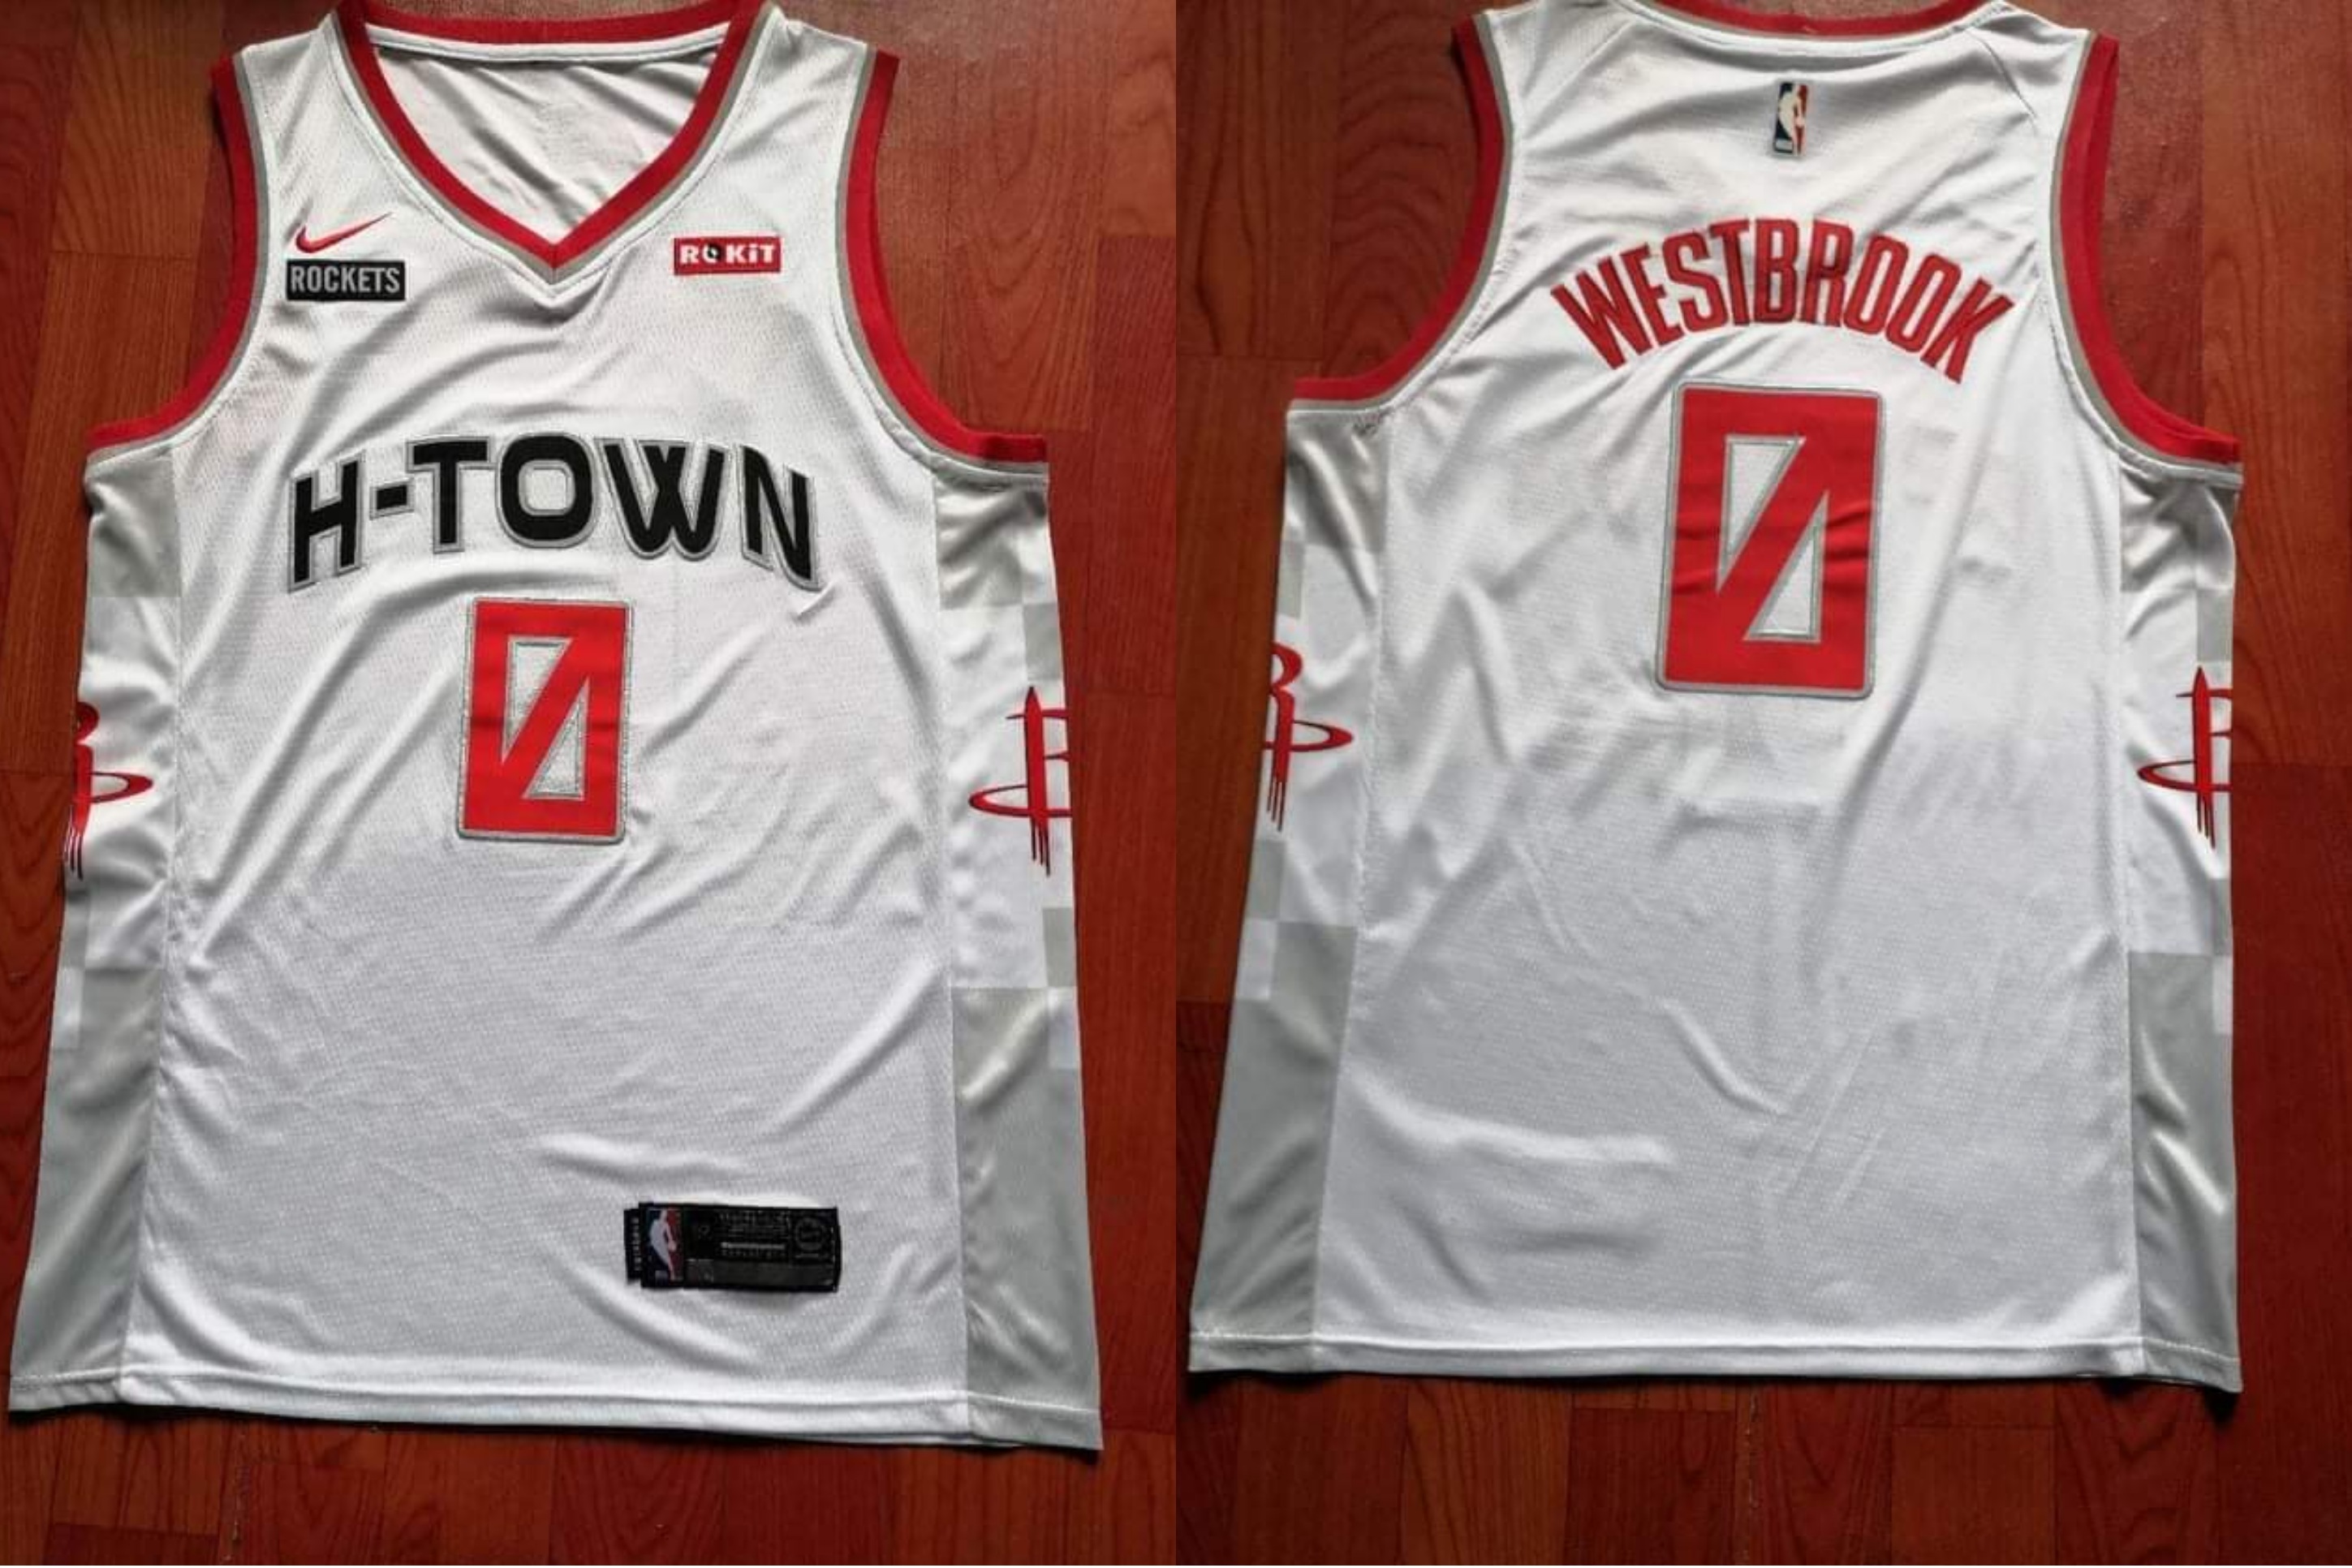 westbrook h town jersey